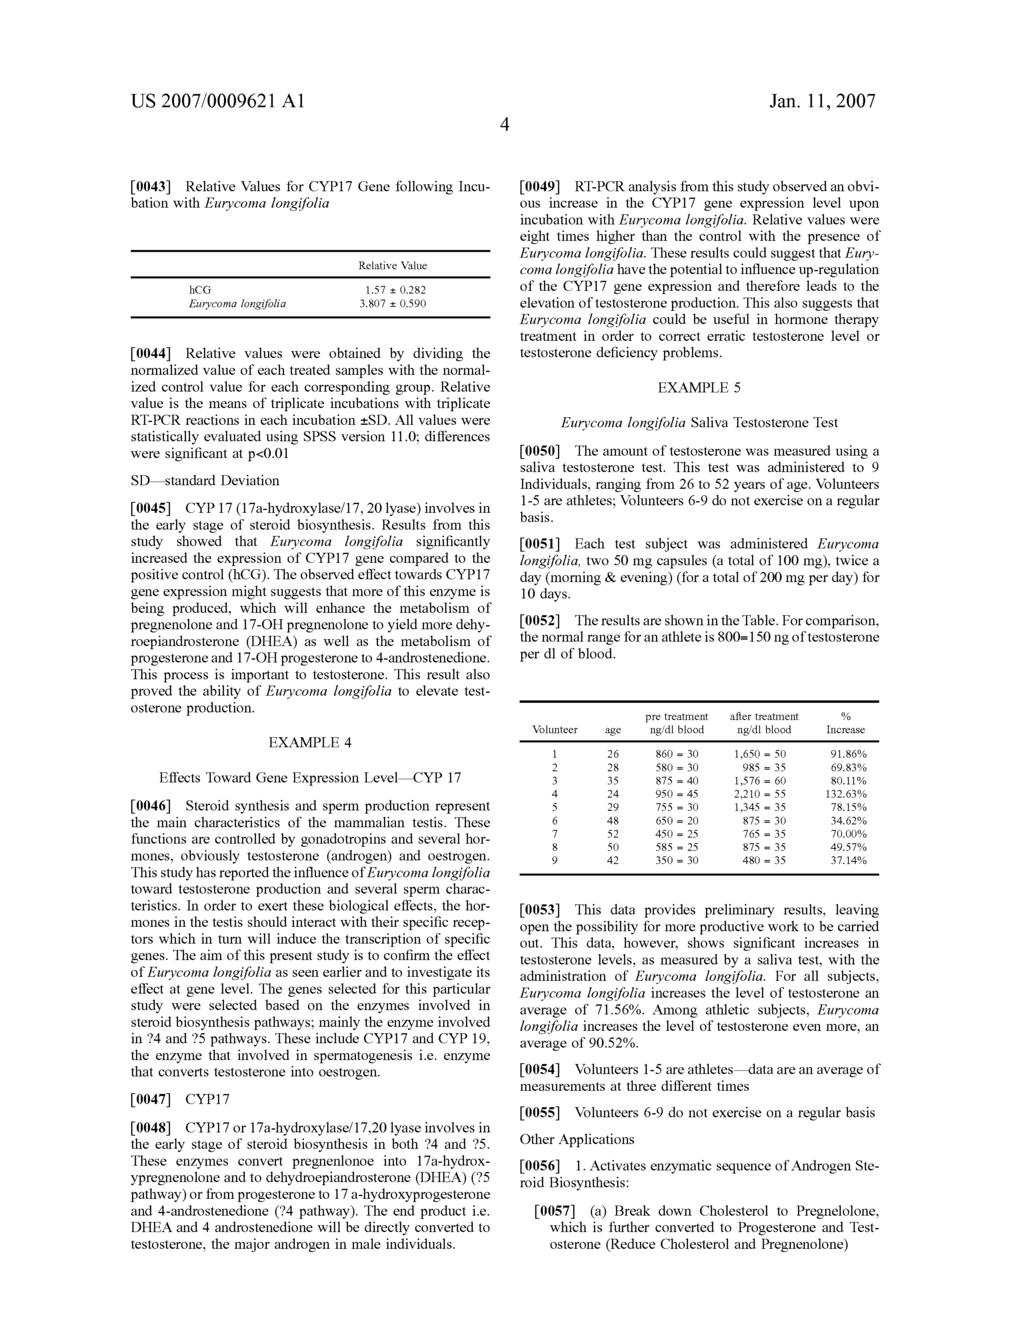 0043 Relative Values for CYP17 Gene following Incu bation with Eurycoma longifolia Relative Value hcg 157 0.282 Eurycoma longifolia 3.807 - O.